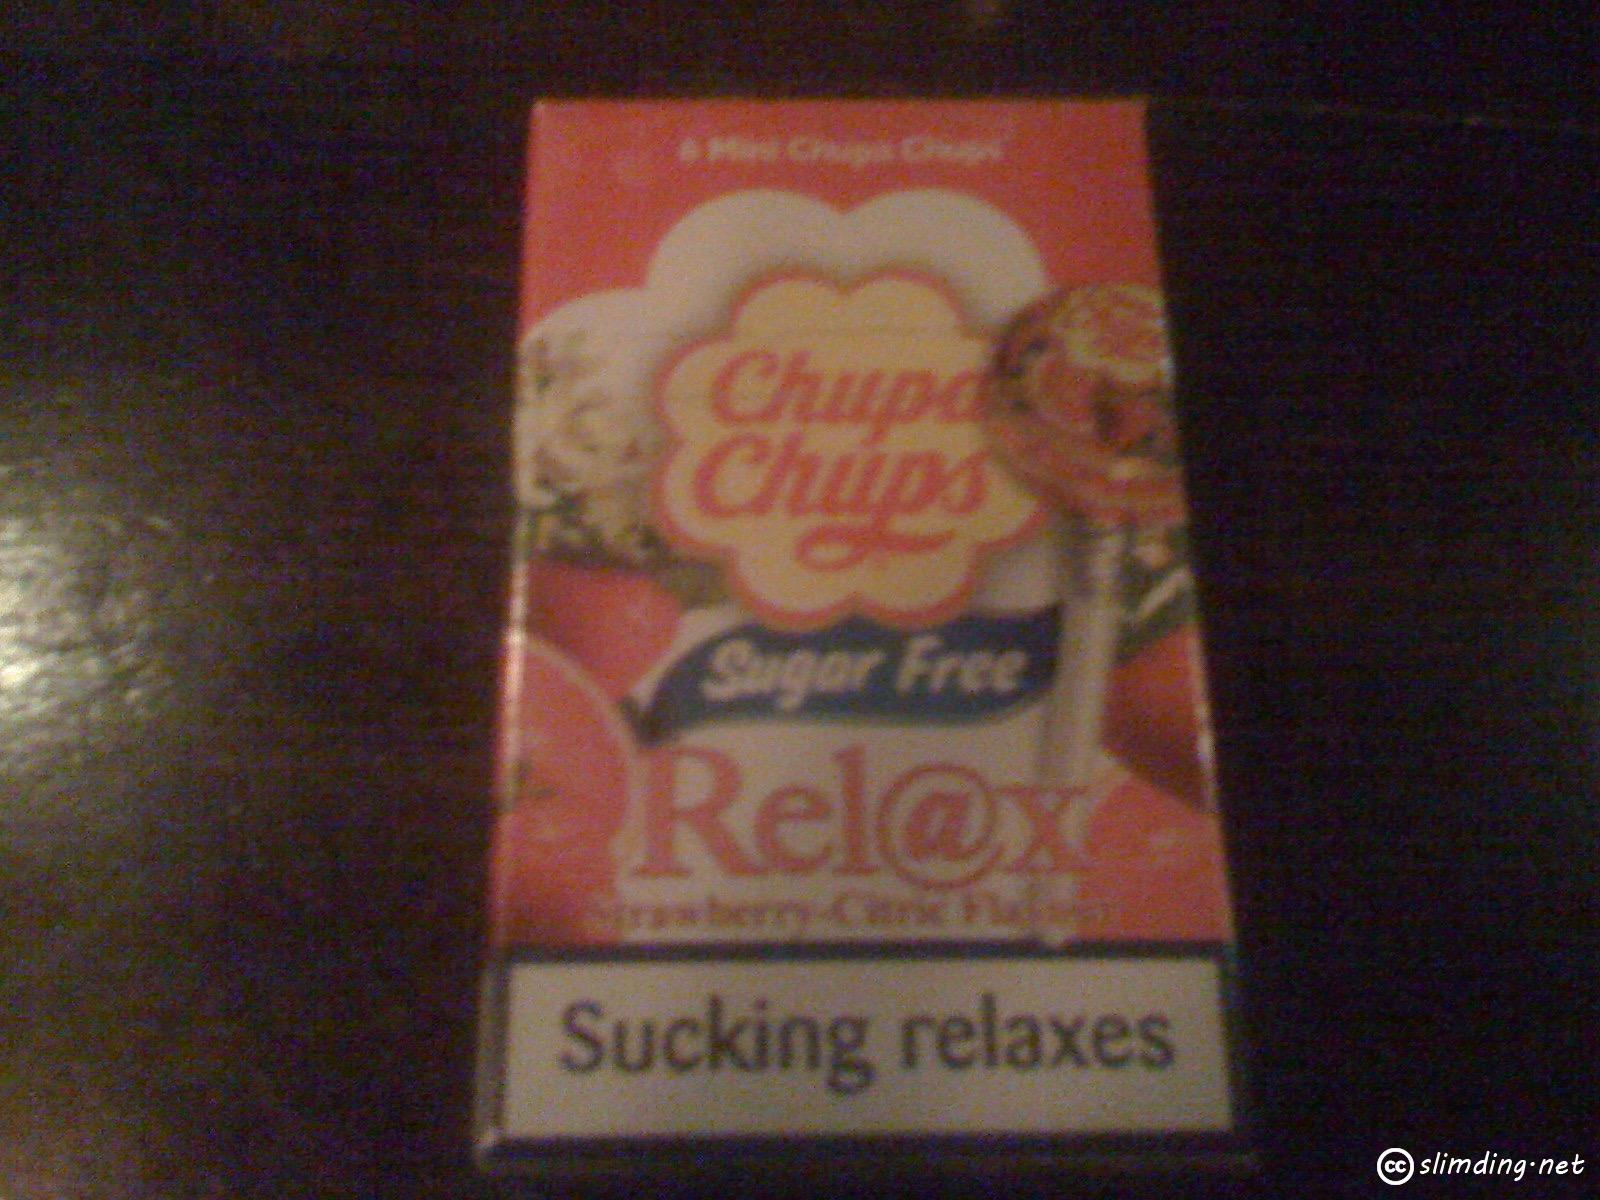 Chupa Chups packaging says Sucking Relaxes